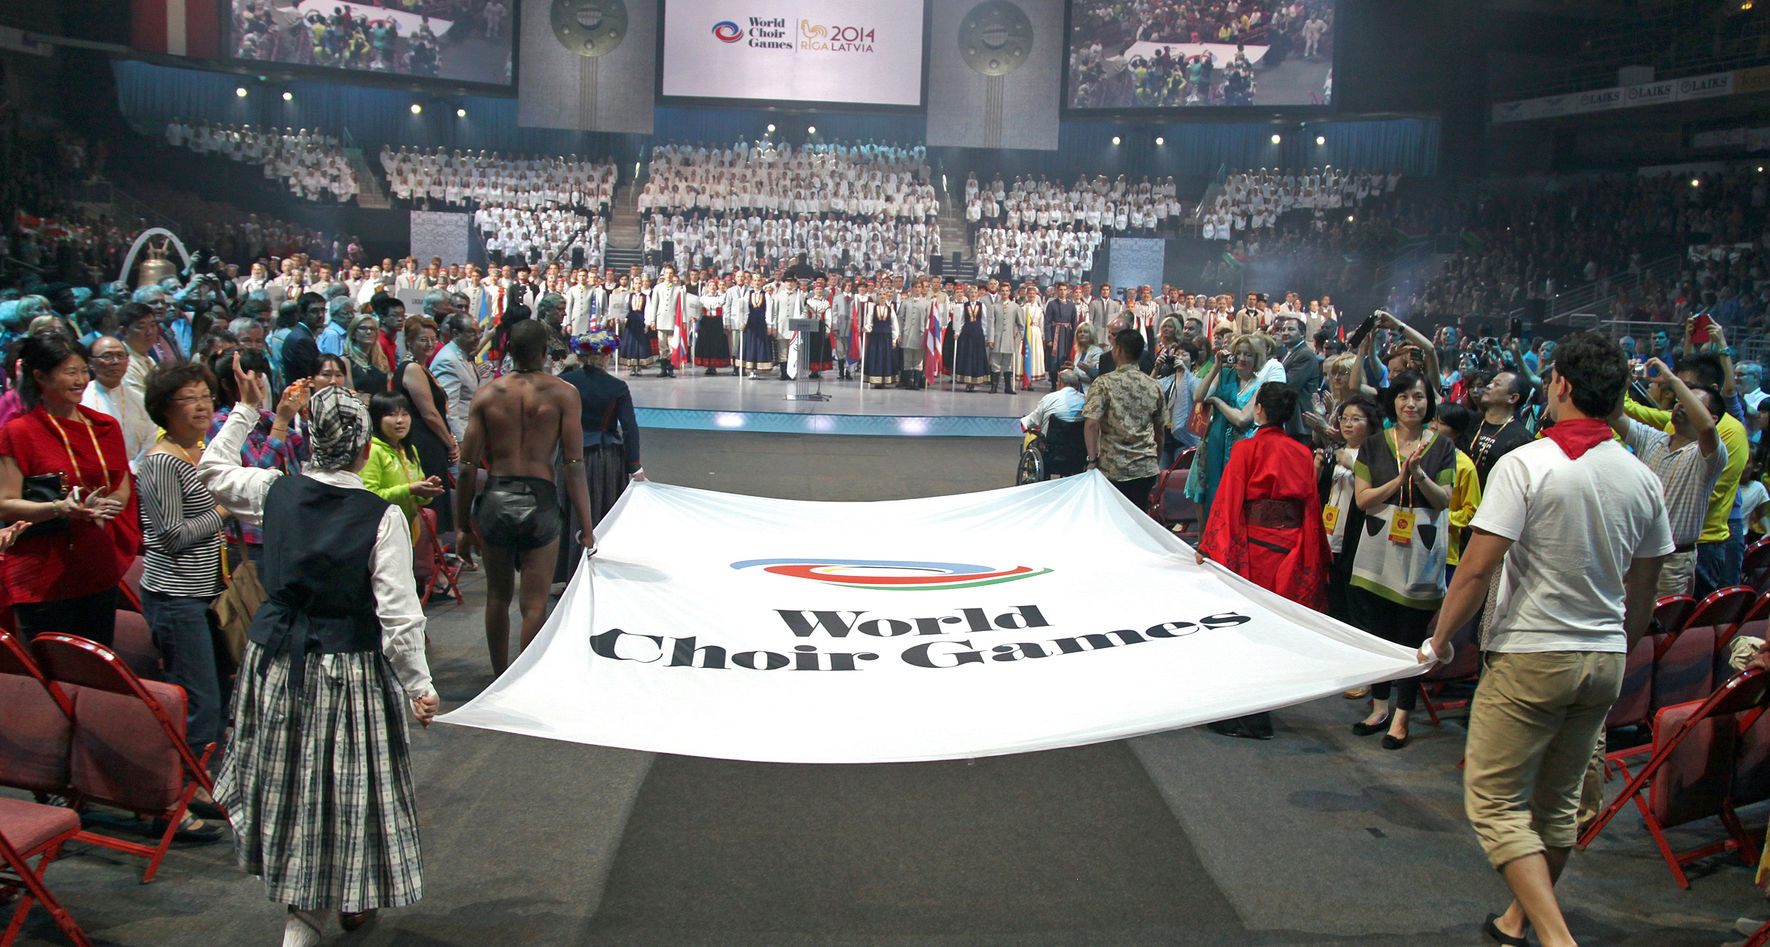 Flag of the World Choir Games 2014